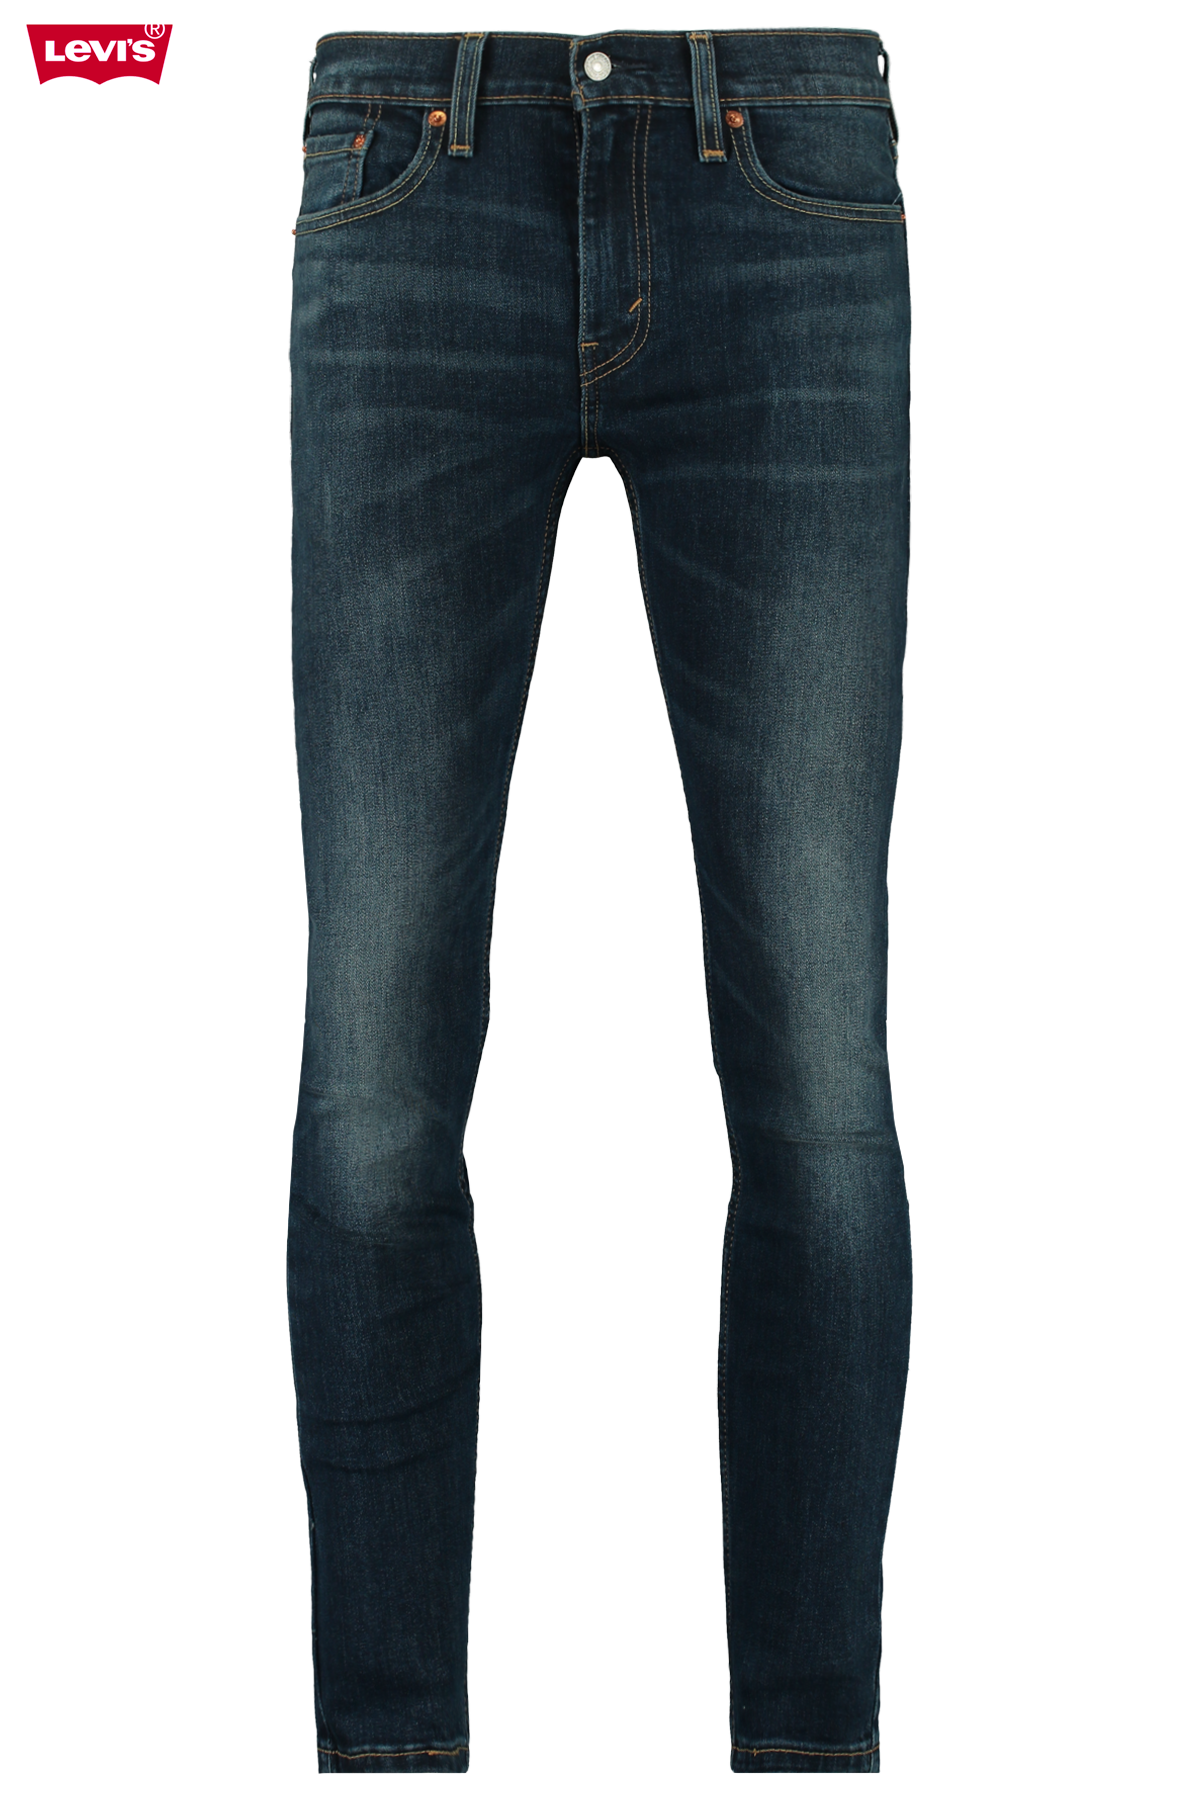 Levi's jeans skinny Denim blue | America